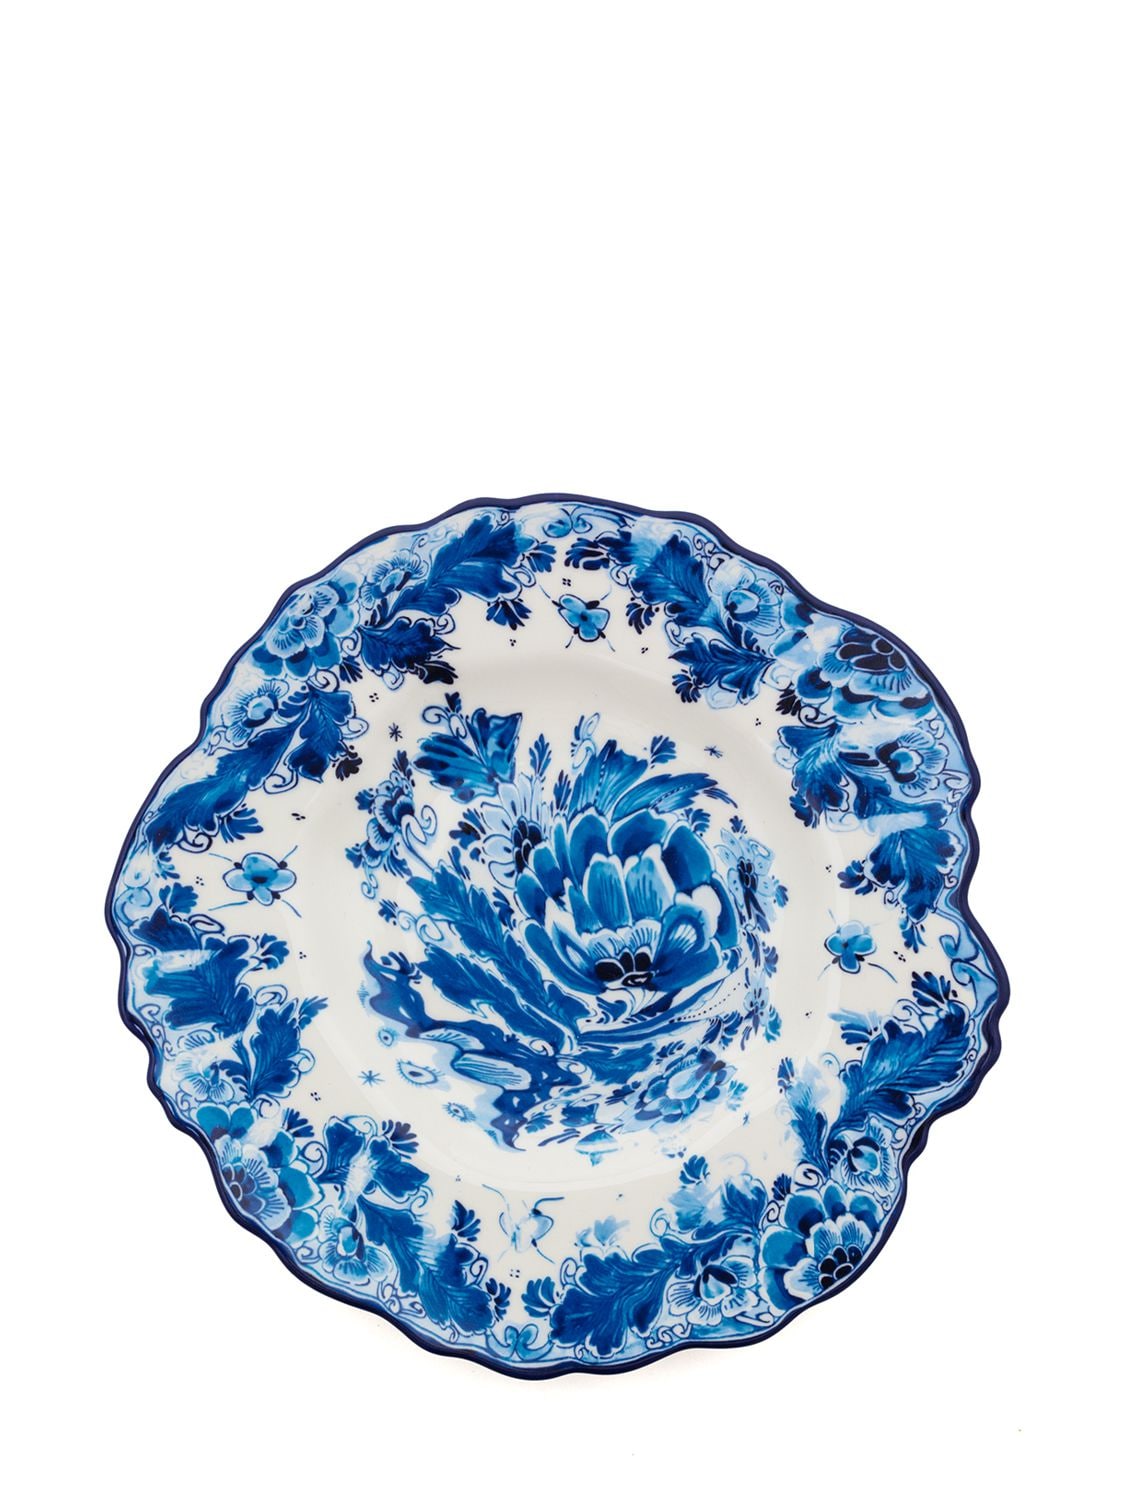 Seletti Classics On Acid Dessert Plate In Blue